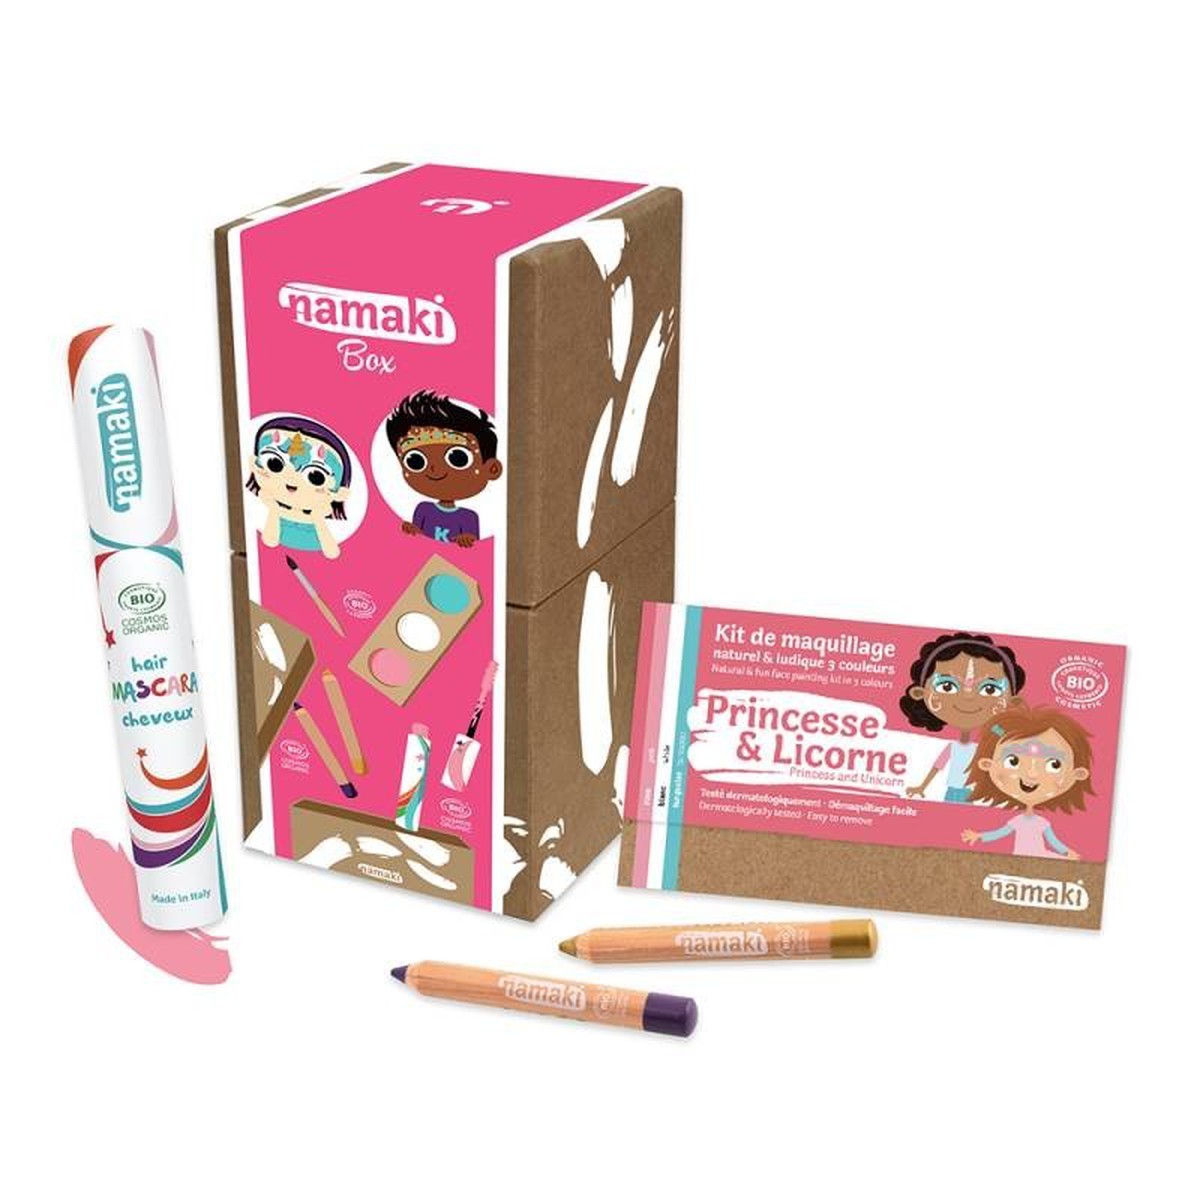   Namaki Box Enchantée Kit 3 Princesse & Licorne - Mascara cheveux Rose - Crayon de maquillage Violet - Crayon de maquillage Or  